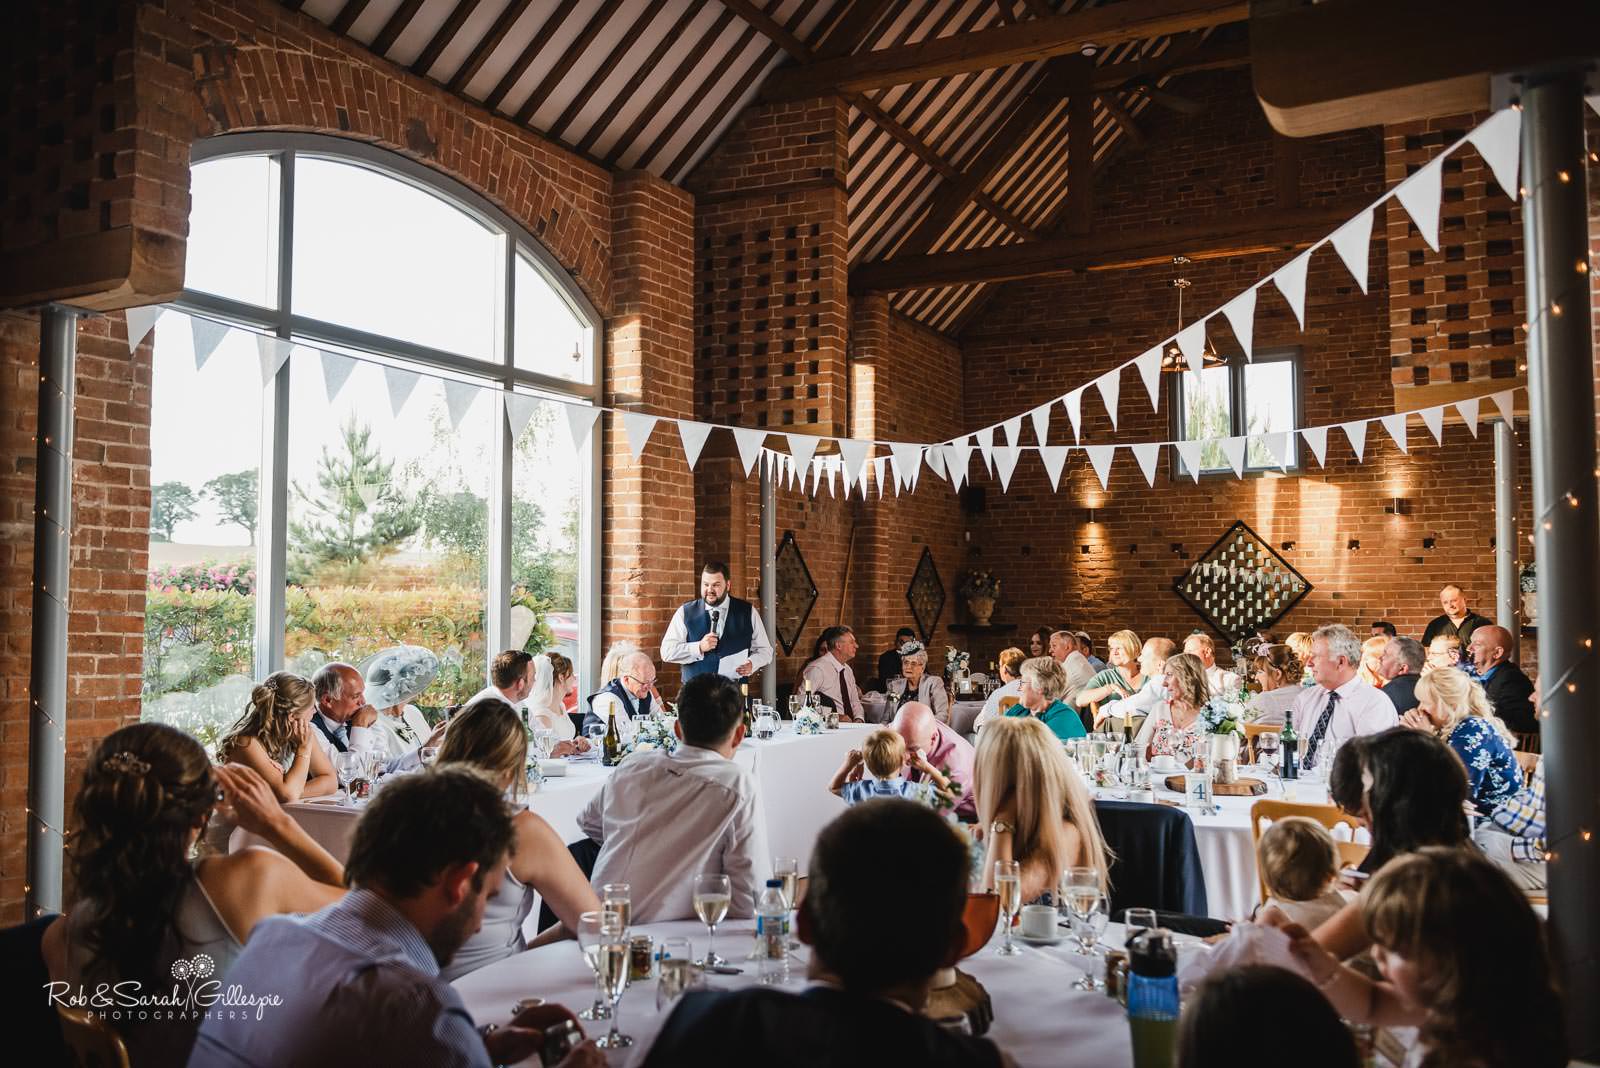 Wedding speeches at Swallows Nest Barn